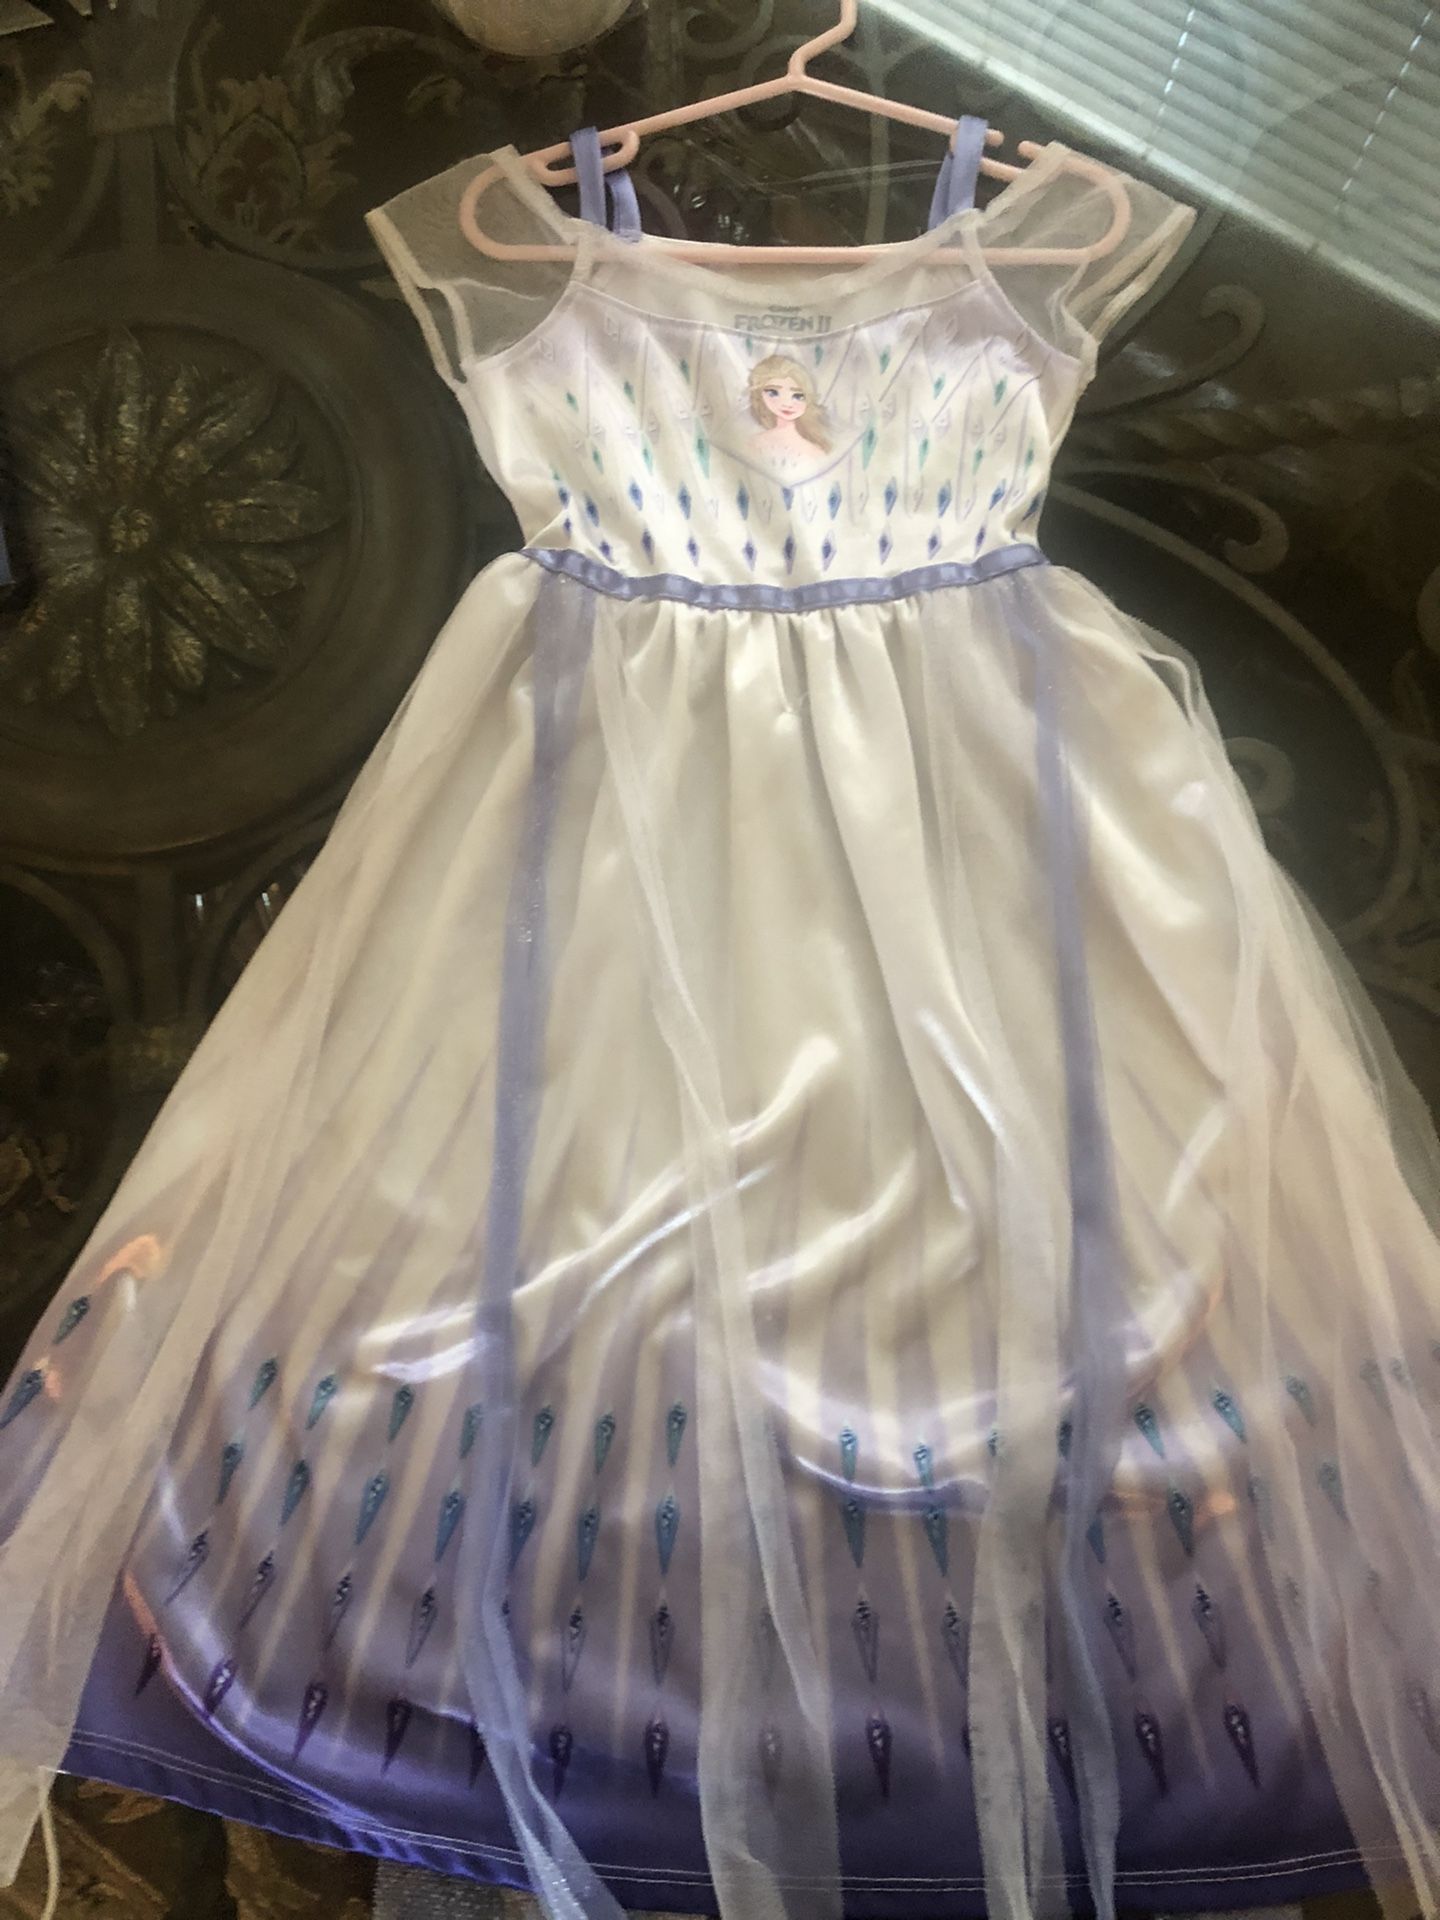 Frozen Set (2) Dress Size 4-6x And Gown Size 5. Excellent Condition! 